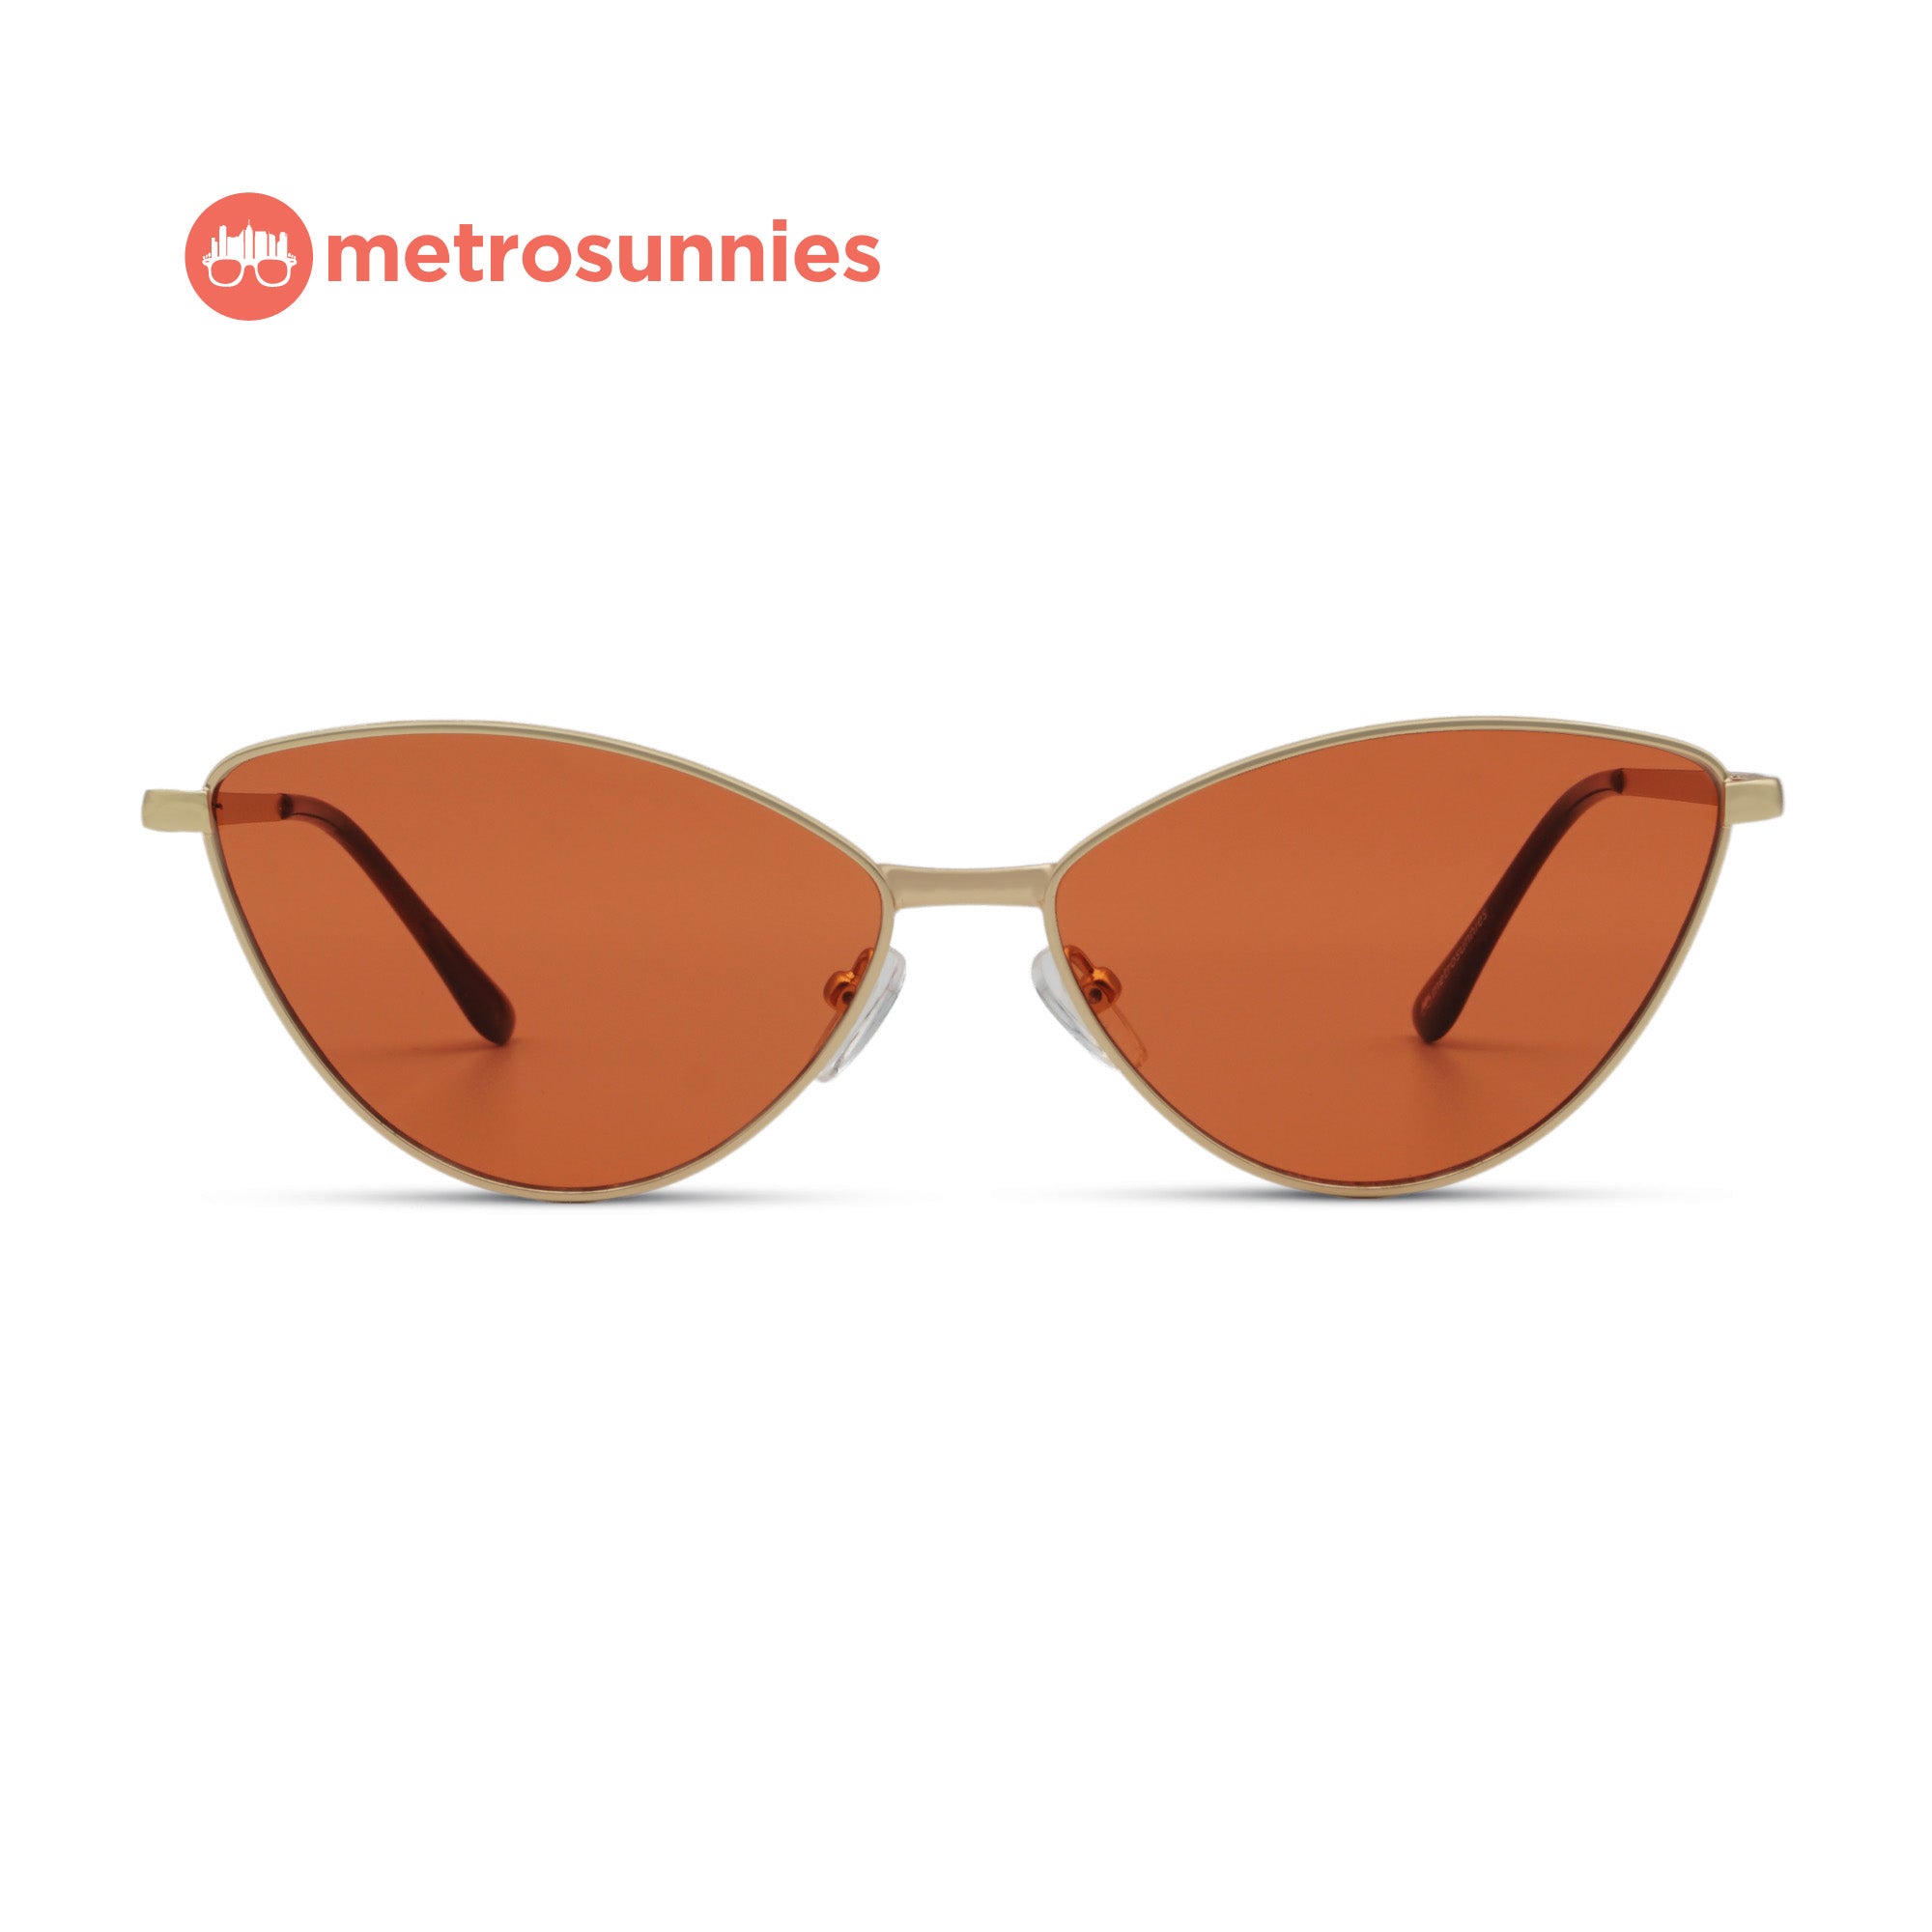 MetroSunnies Mila Sunnies (Brick) / Sunglasses with UV400 Protection / Fashion Eyewear Unisex